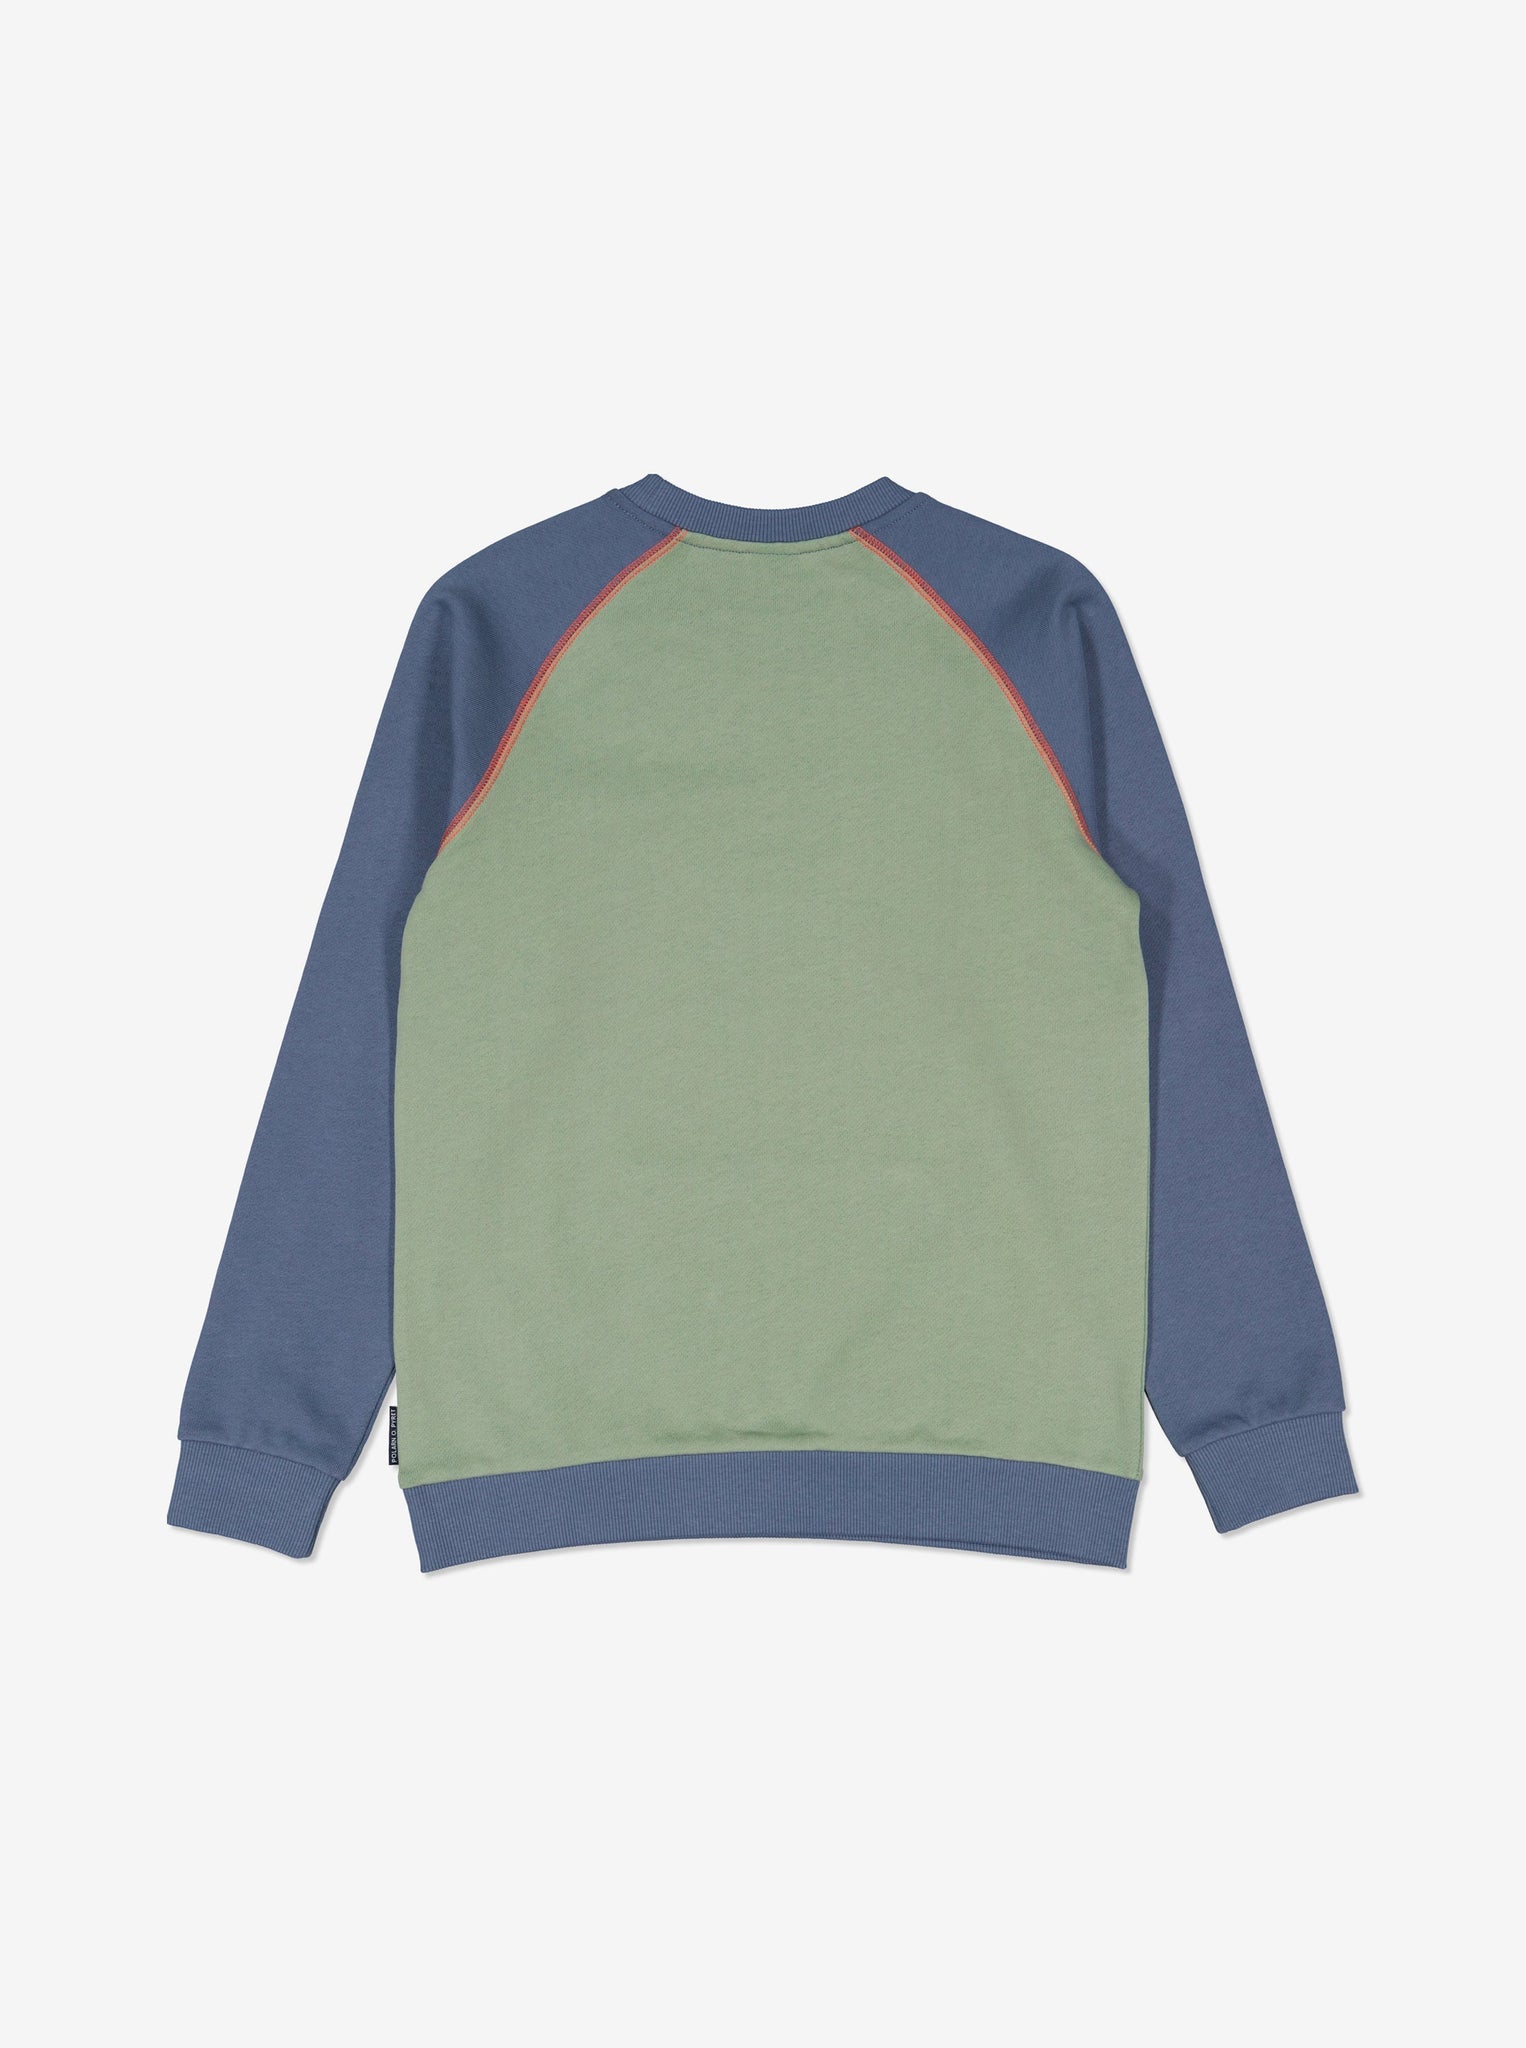 Kids Green Sweatshirt from Polarn O. Pyret Kidswear. Made from 100% GOTS Organic Cotton.